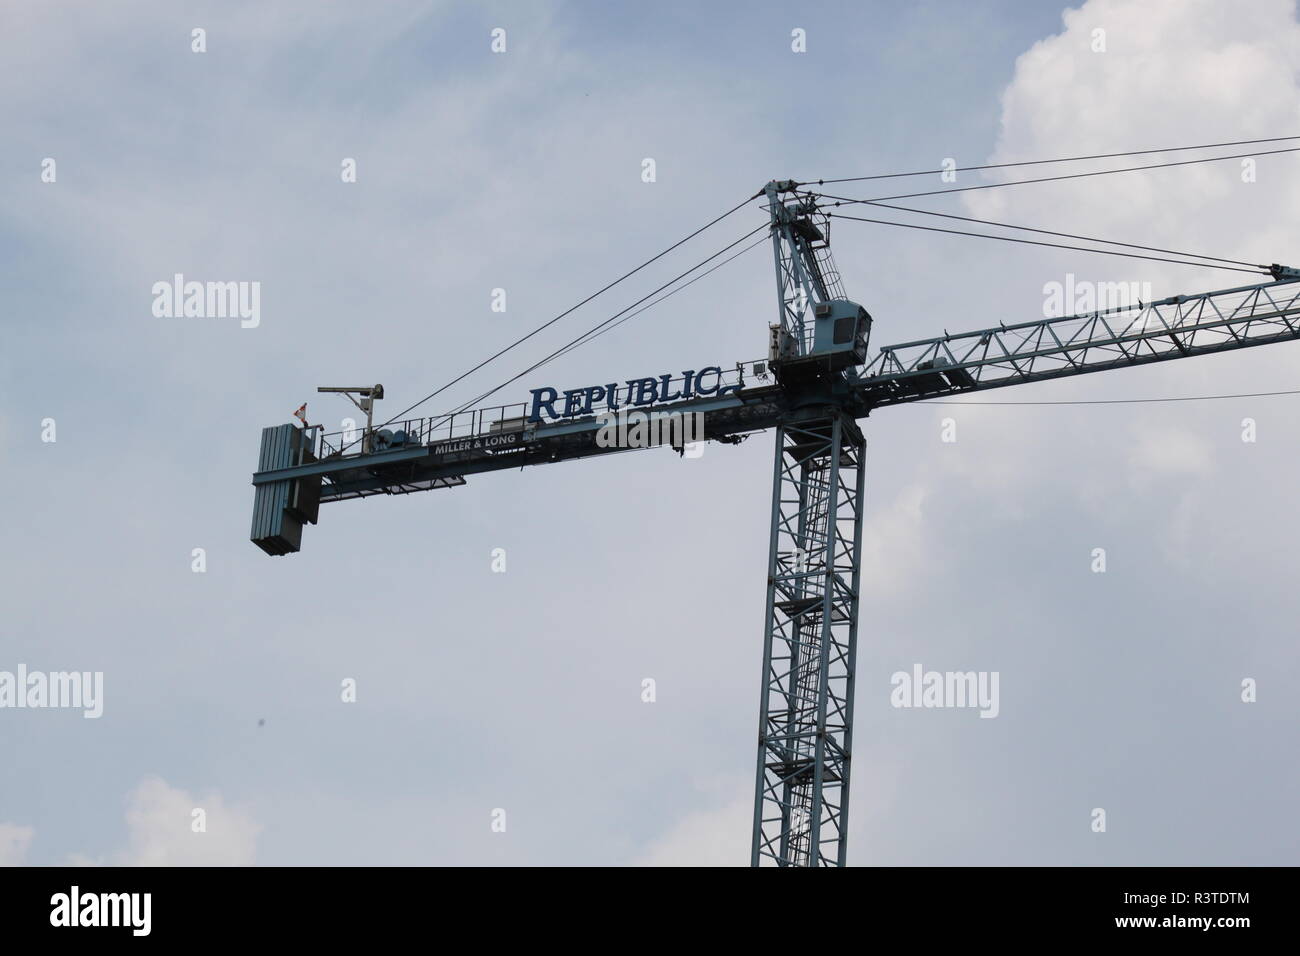 Republic crane Stock Photo